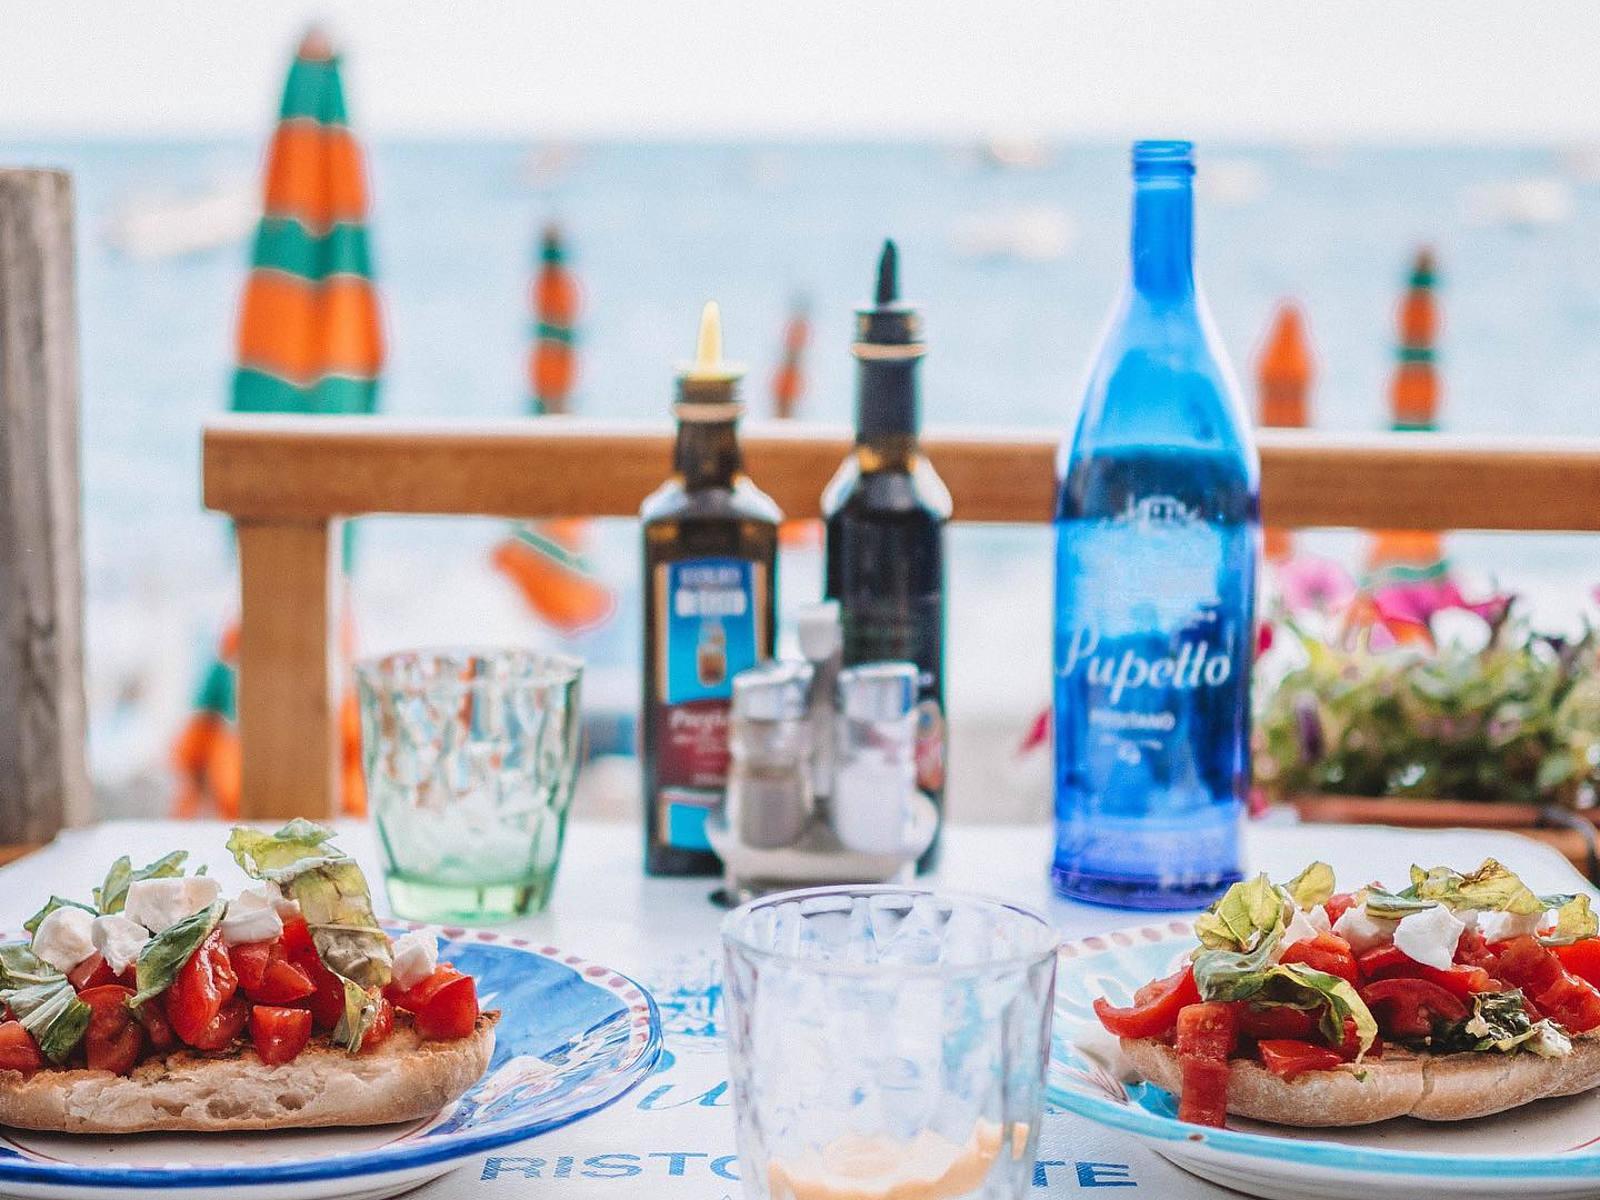 Pupetto Beach Club - Positano Beach Club. Seafood,Fish Restaurant. Cocktail Bar. Amalfi Coast lifestyle